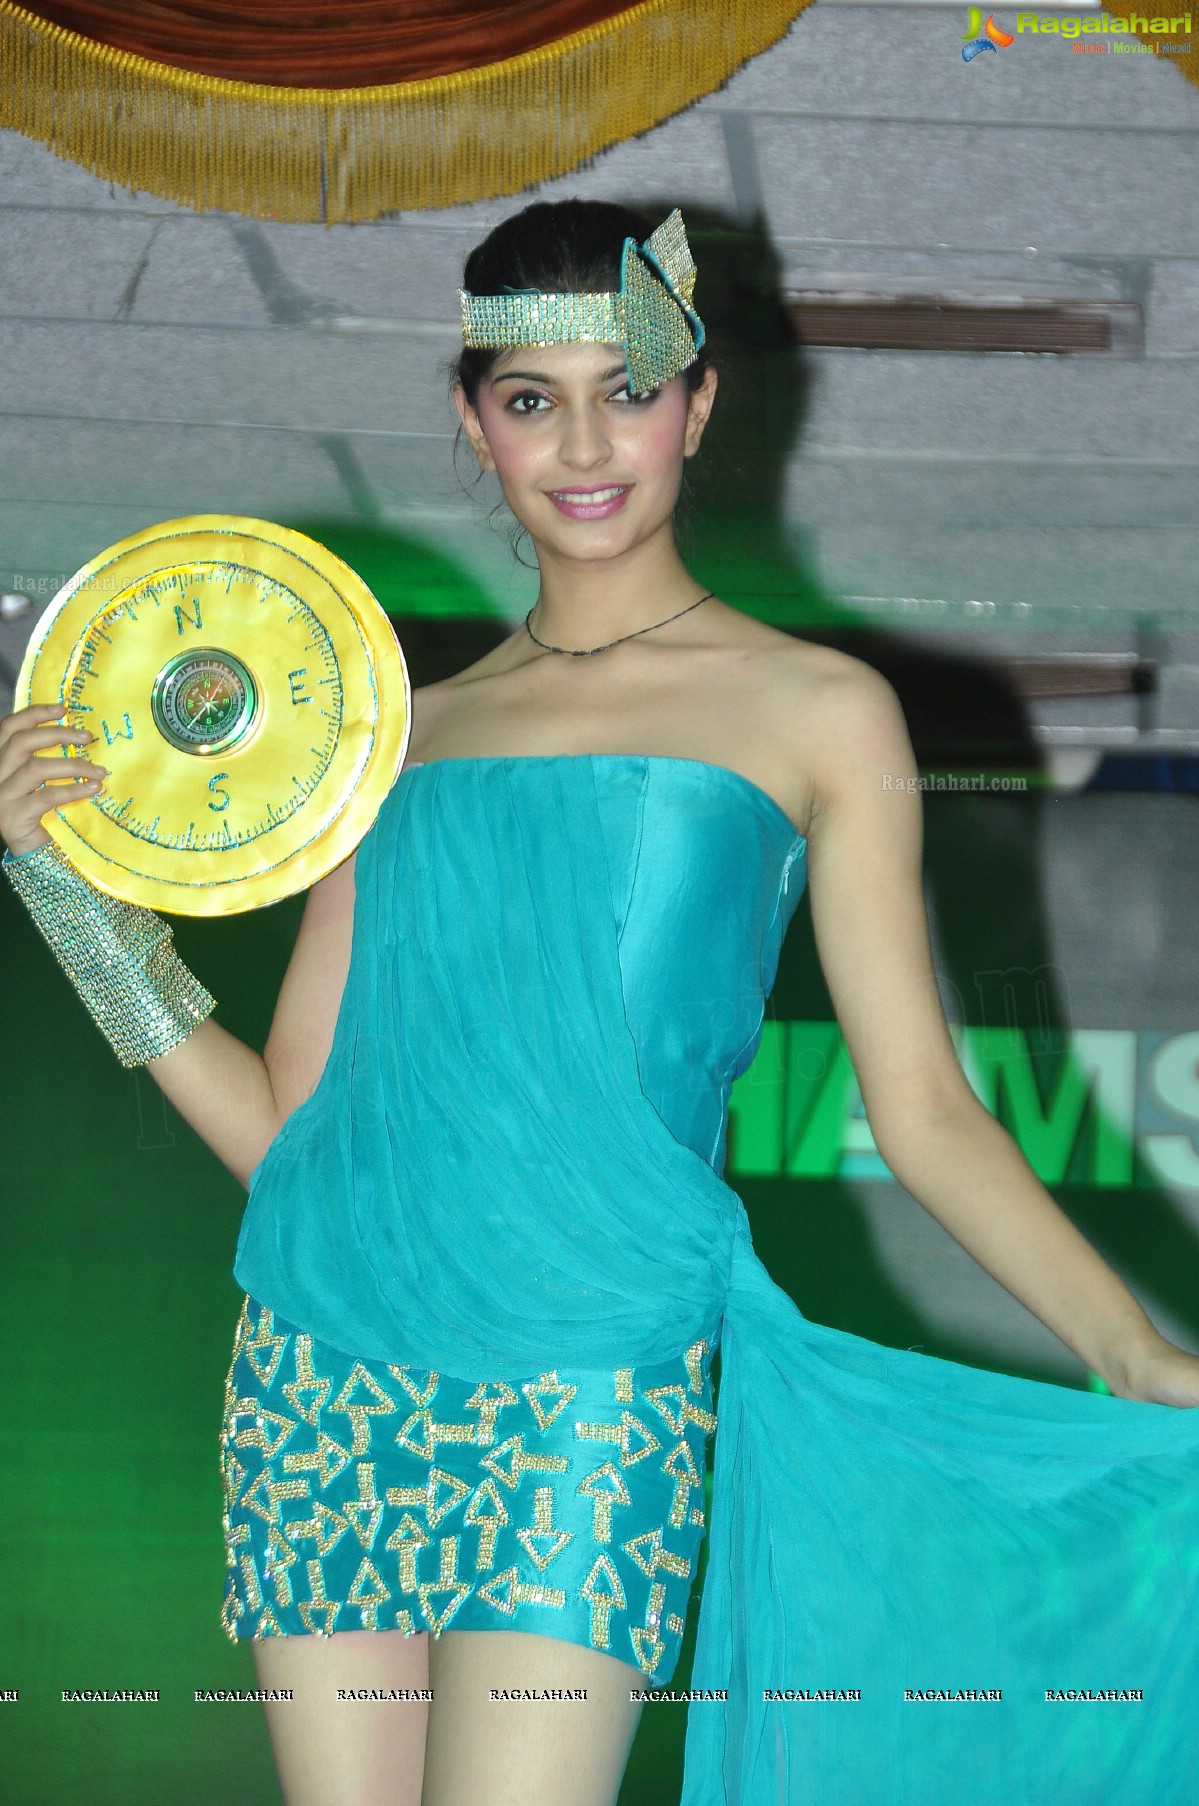 Hamstech Midterm Fashion Show 2013, Hyderabad